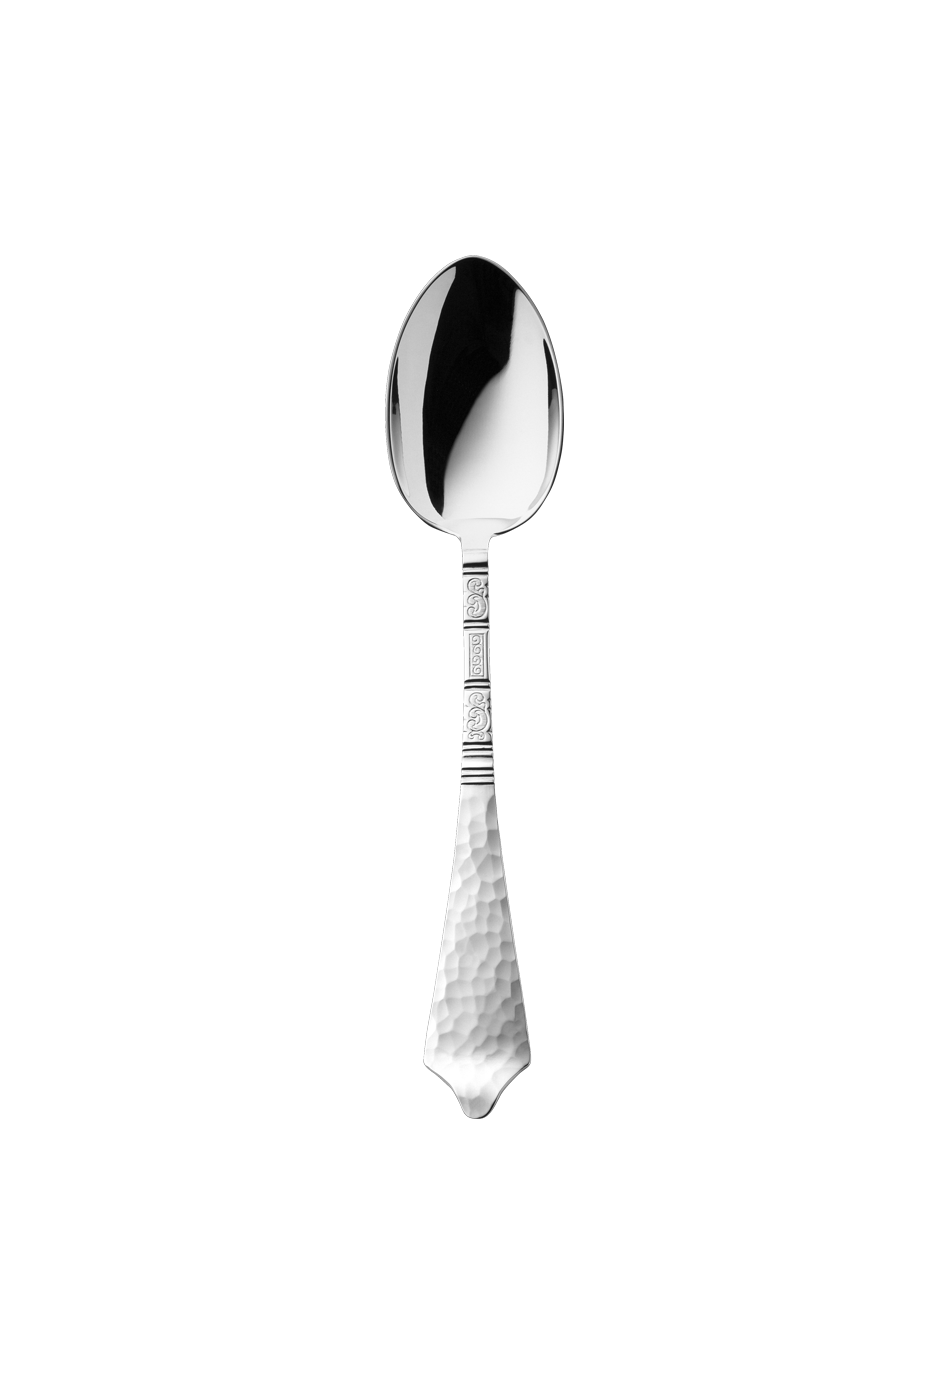 Hermitage Dessert Spoon (150g massive silverplated)